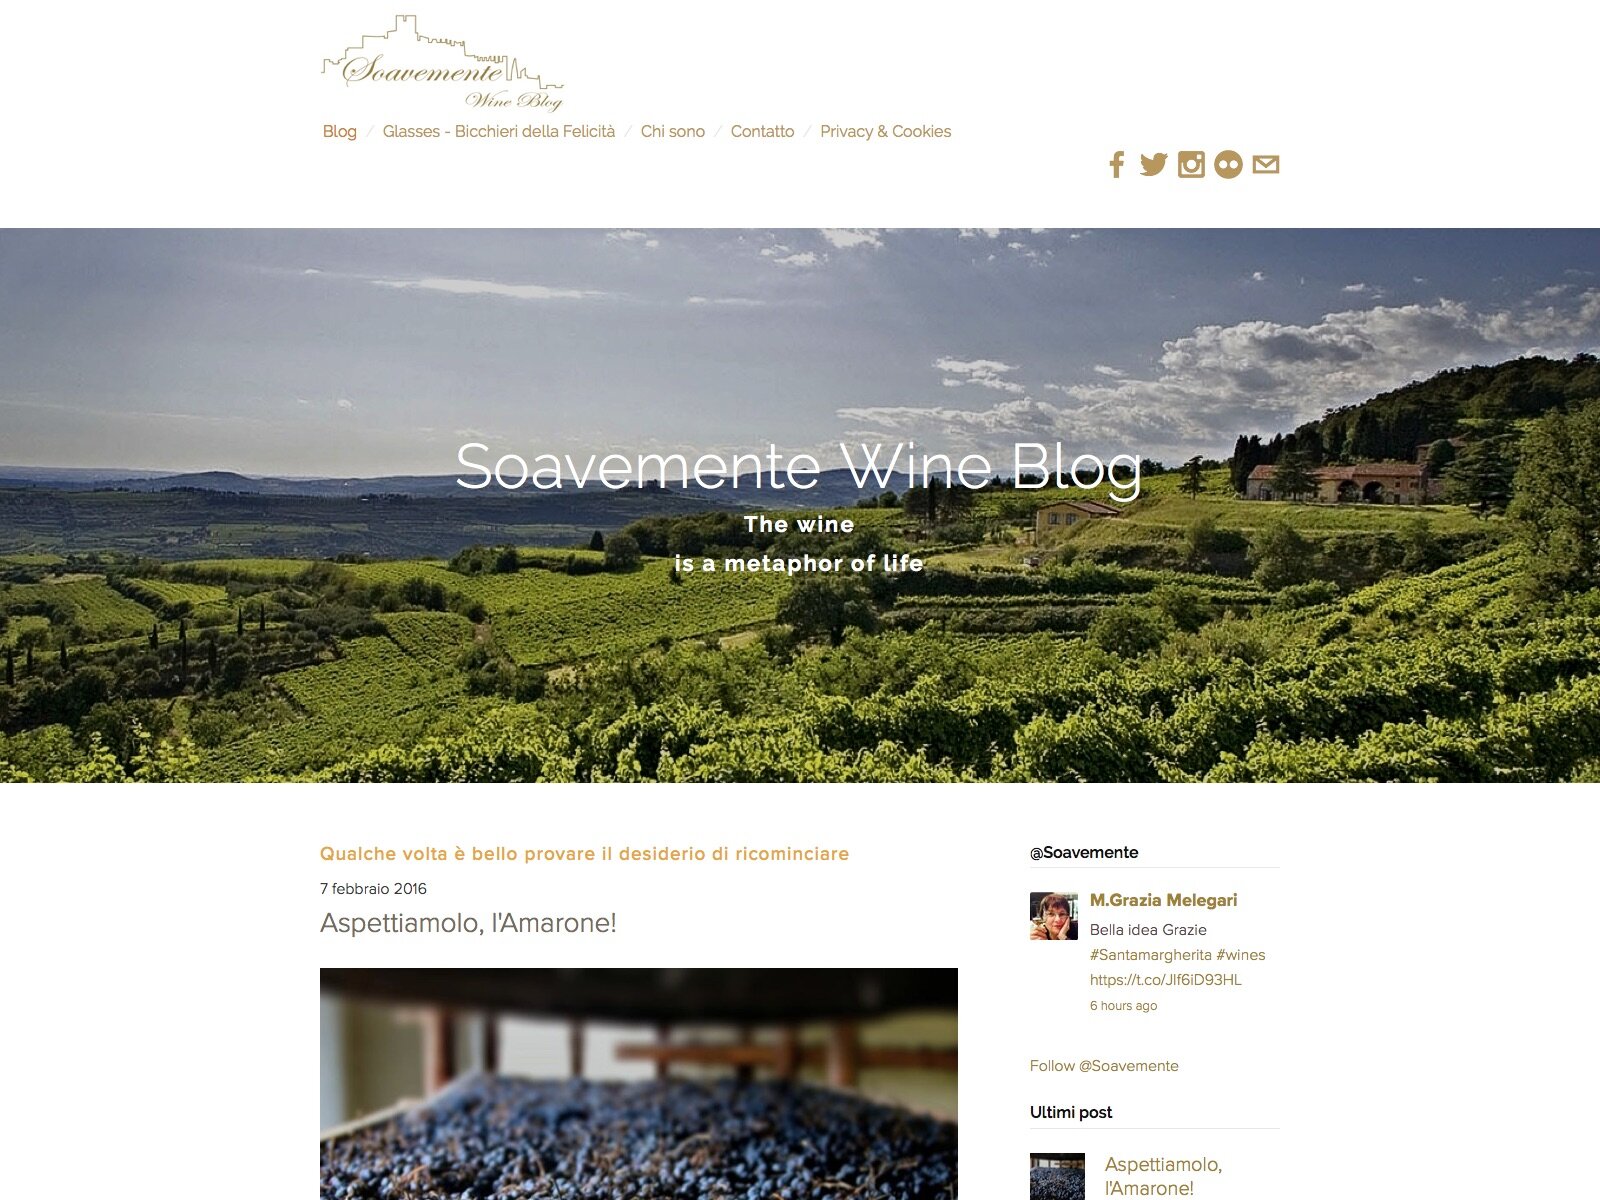 Soavemente.net, wine blog